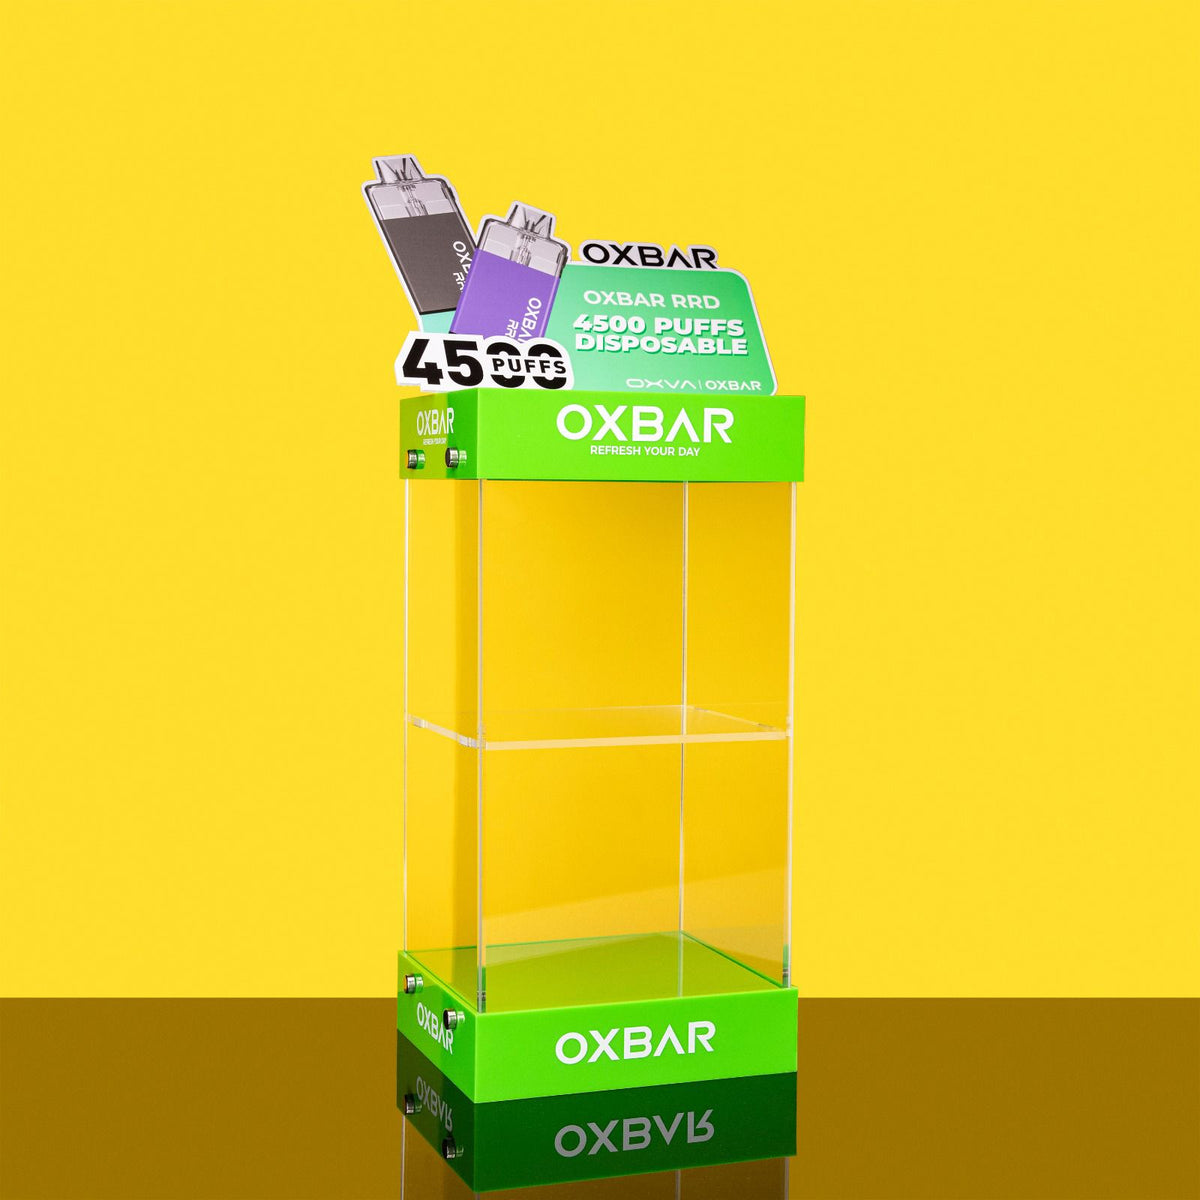 OXBAR RRD 4500 + FREE STAND (60)